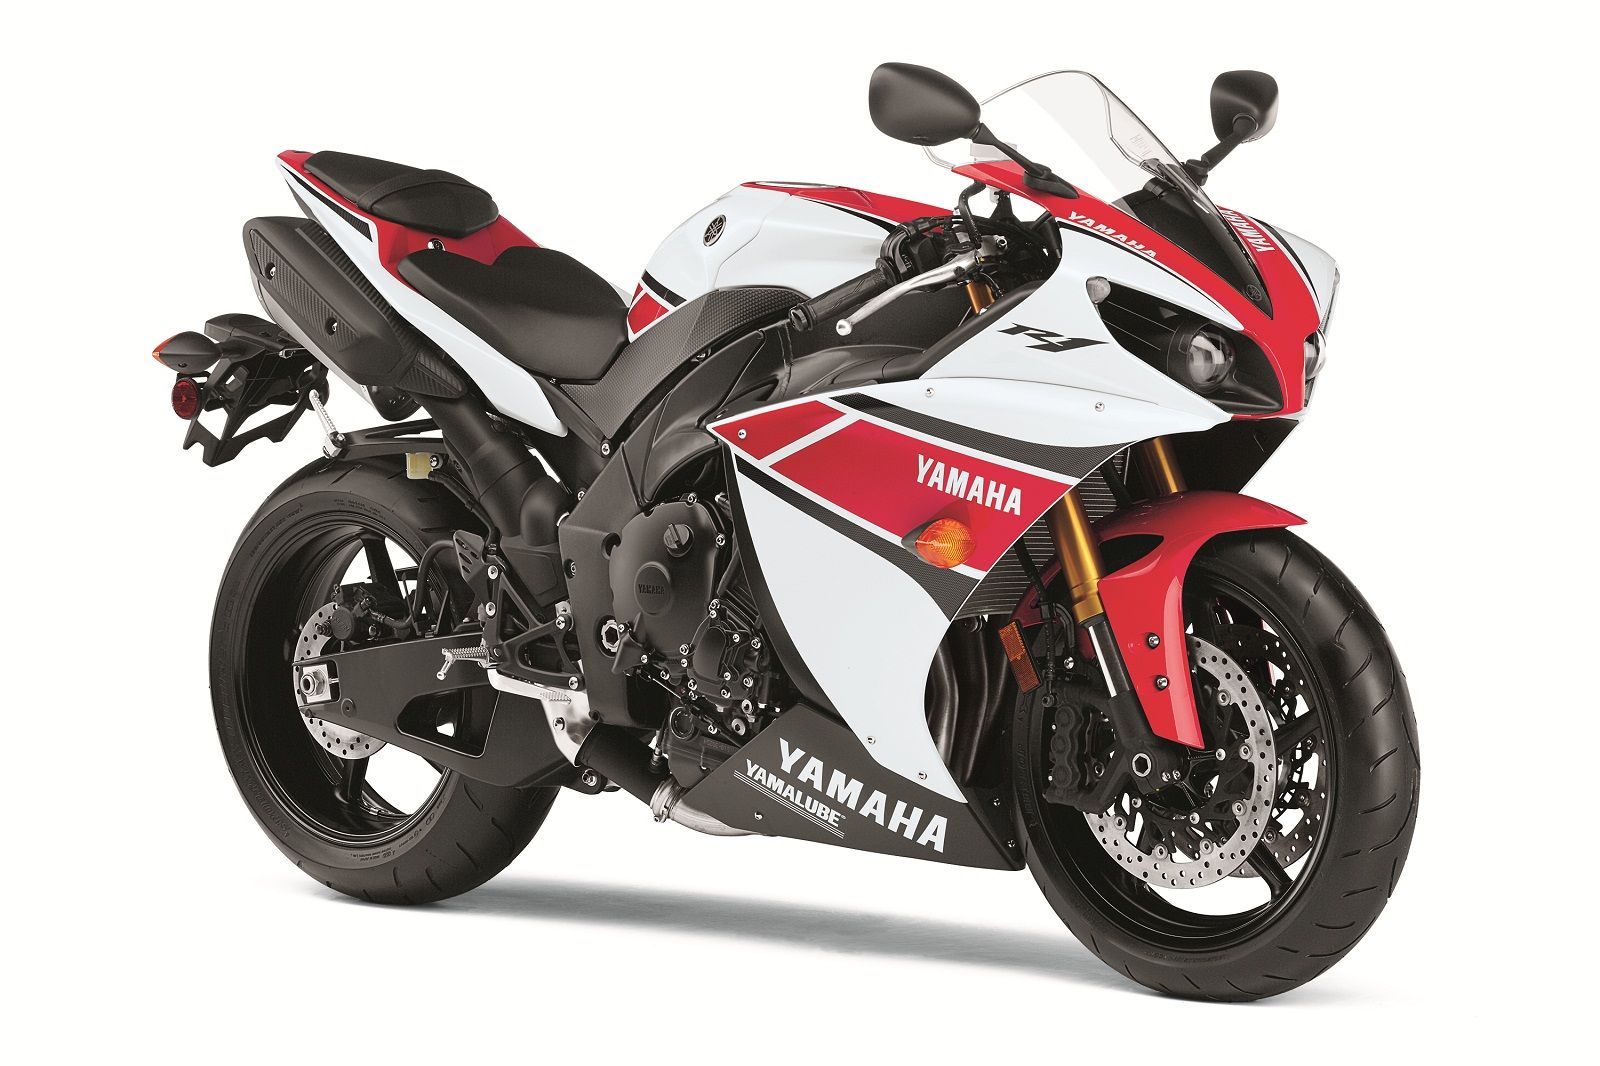 2012 Yamaha R1 speed bike